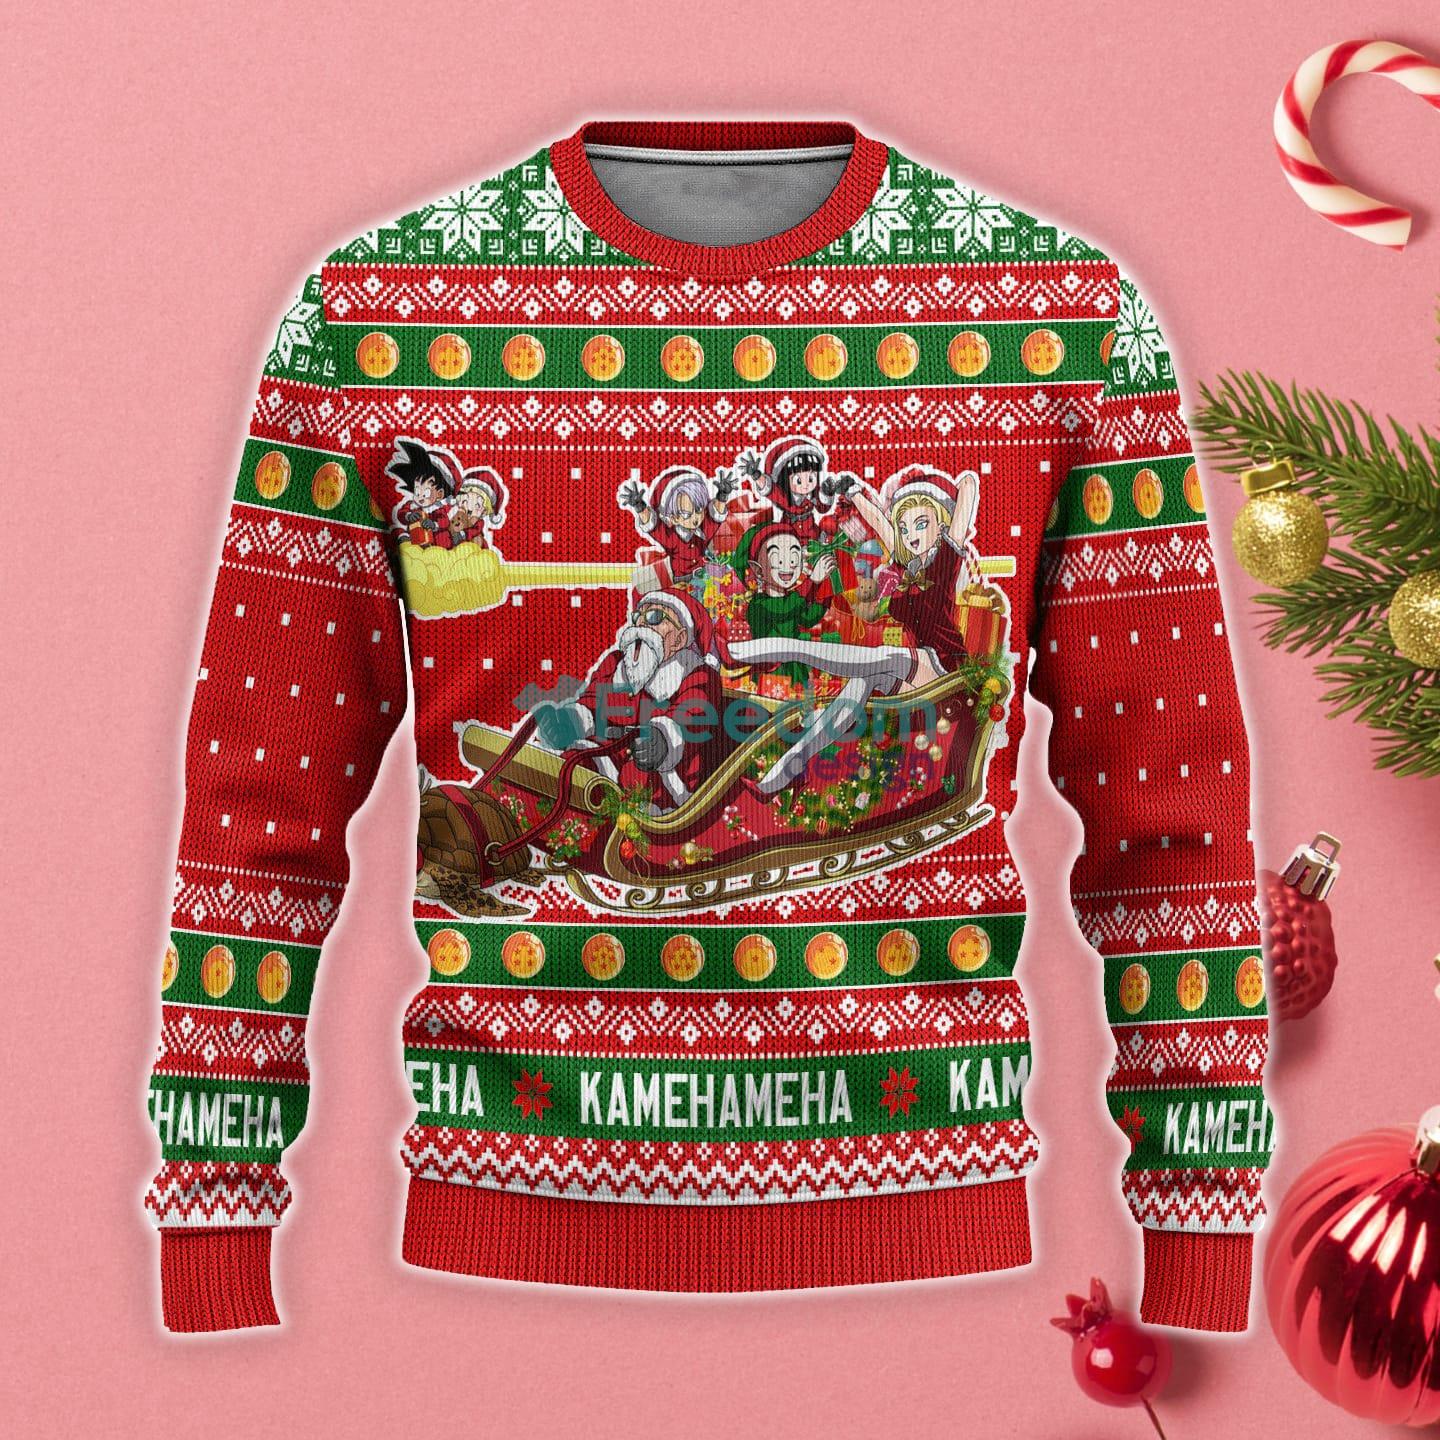 Seattle Seahawks Custom Ugly Christmas Sweater - EmonShop - Tagotee